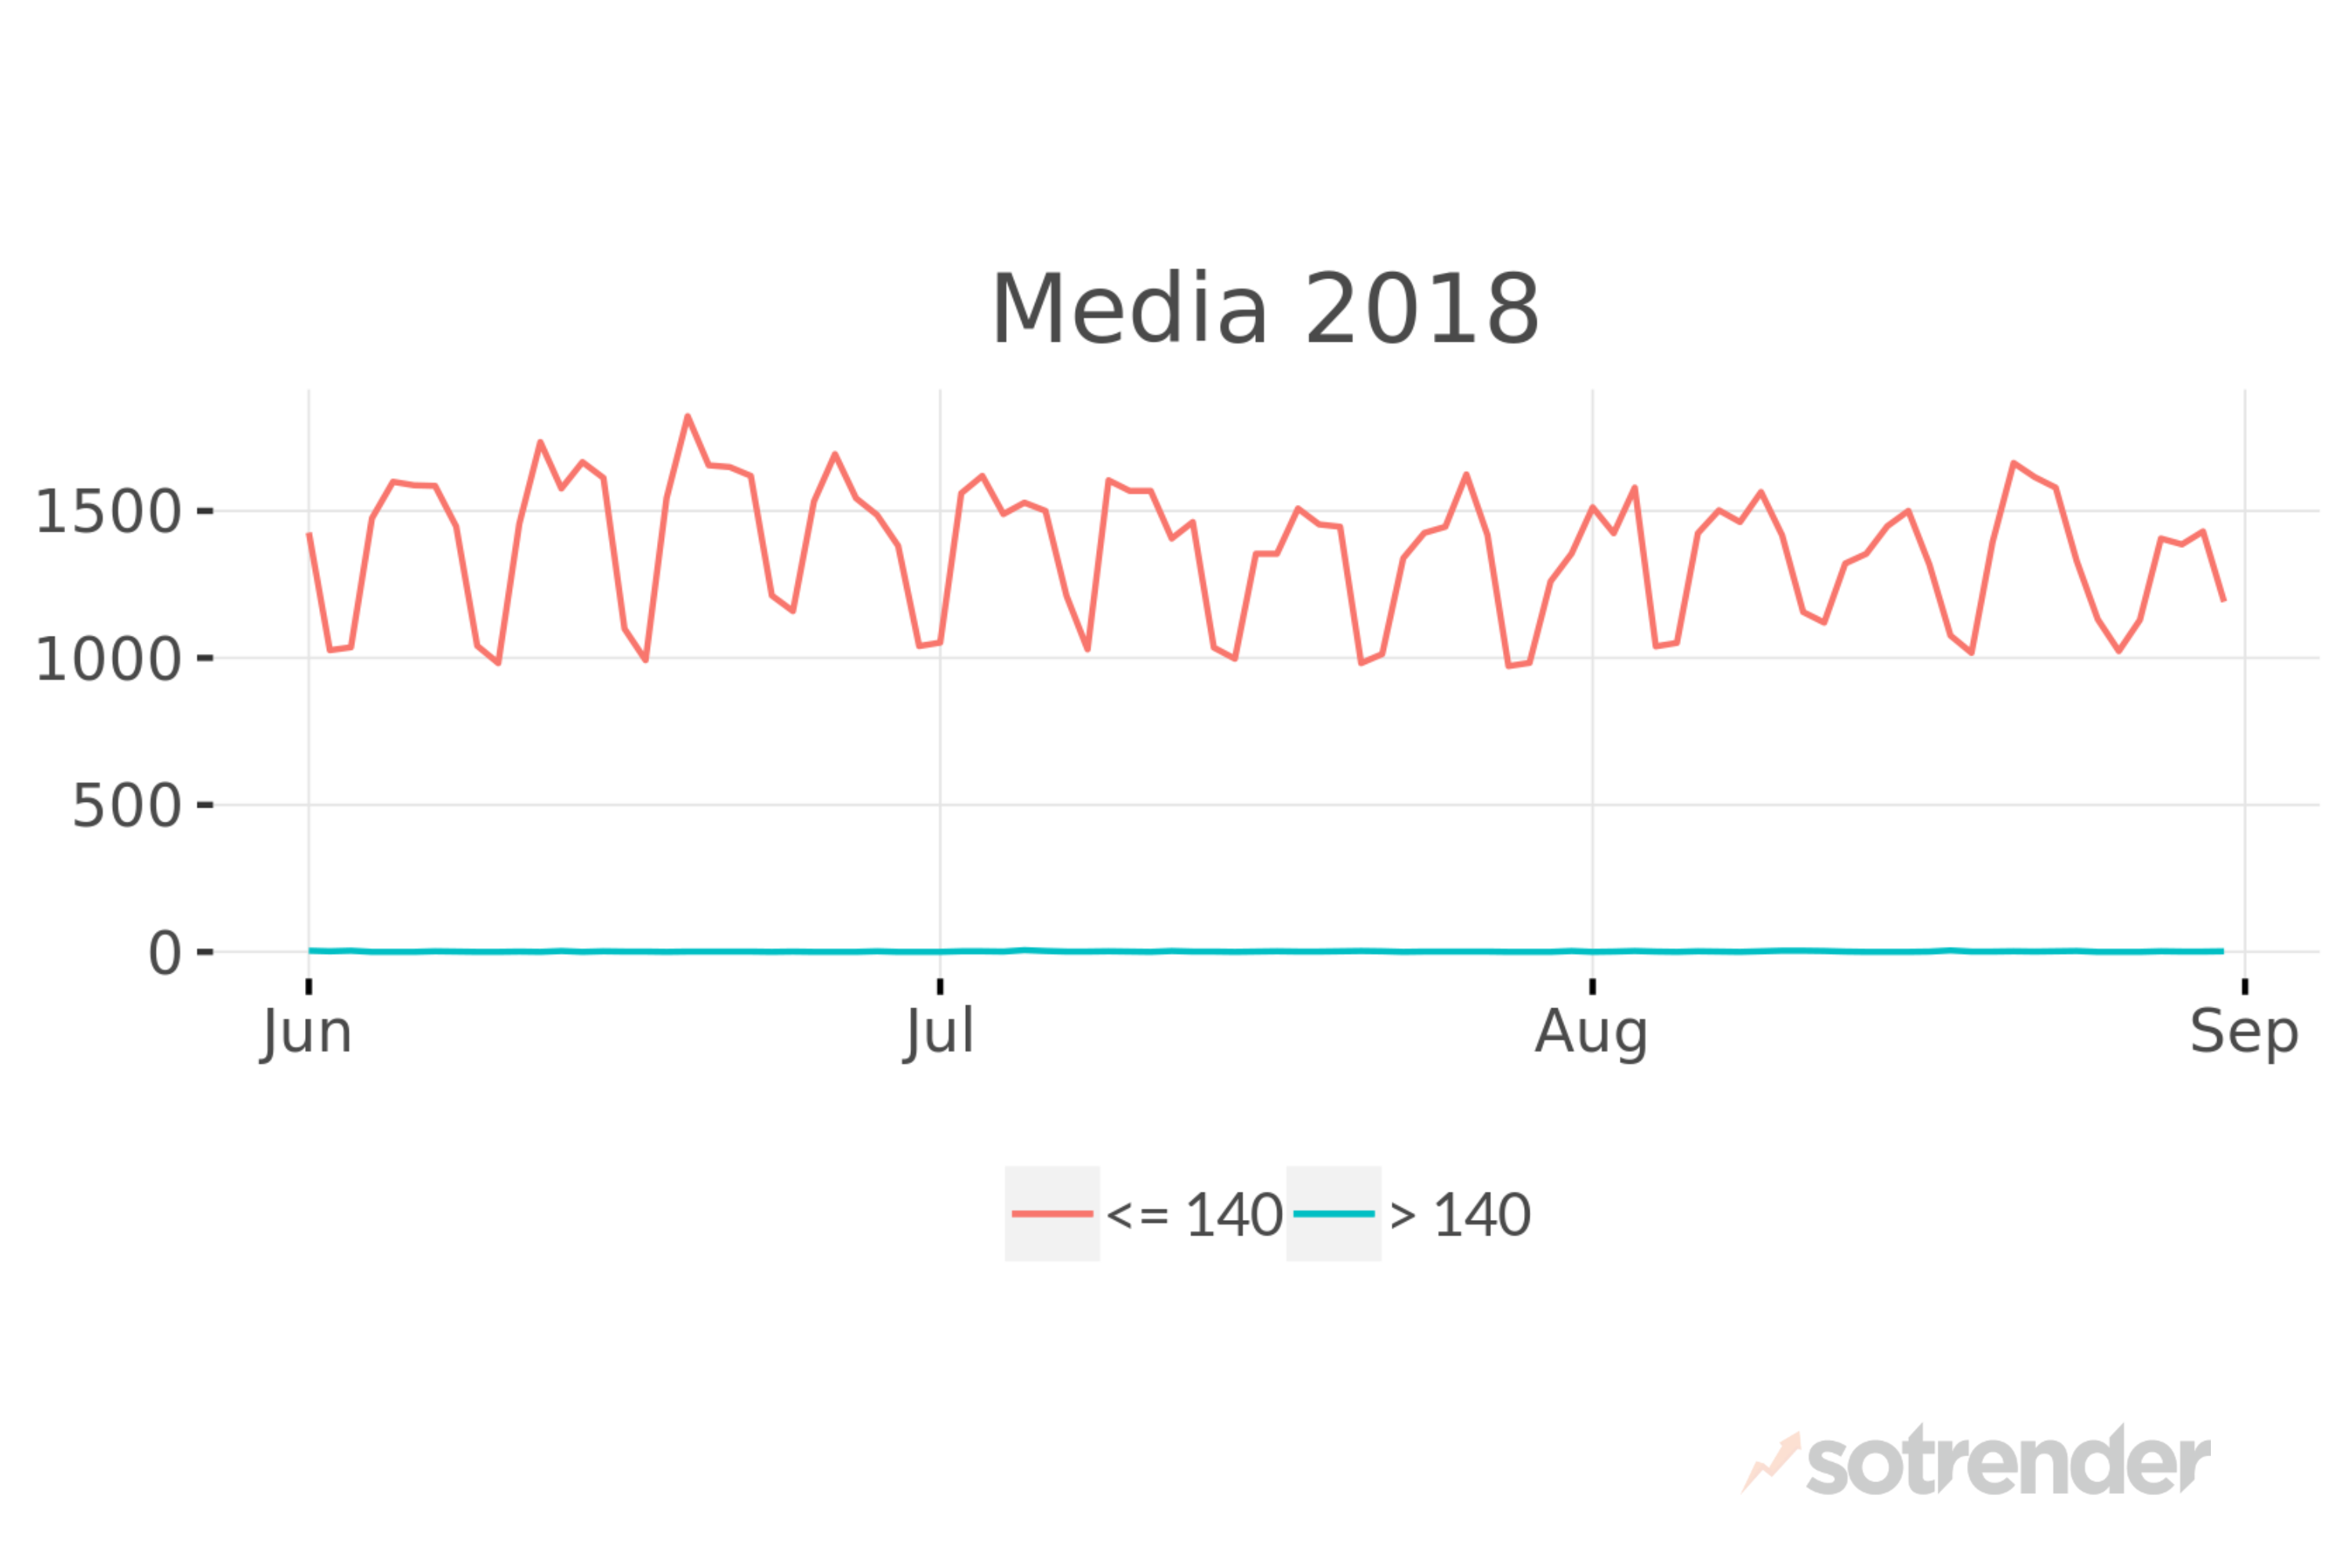 Media on Twitter in 2018